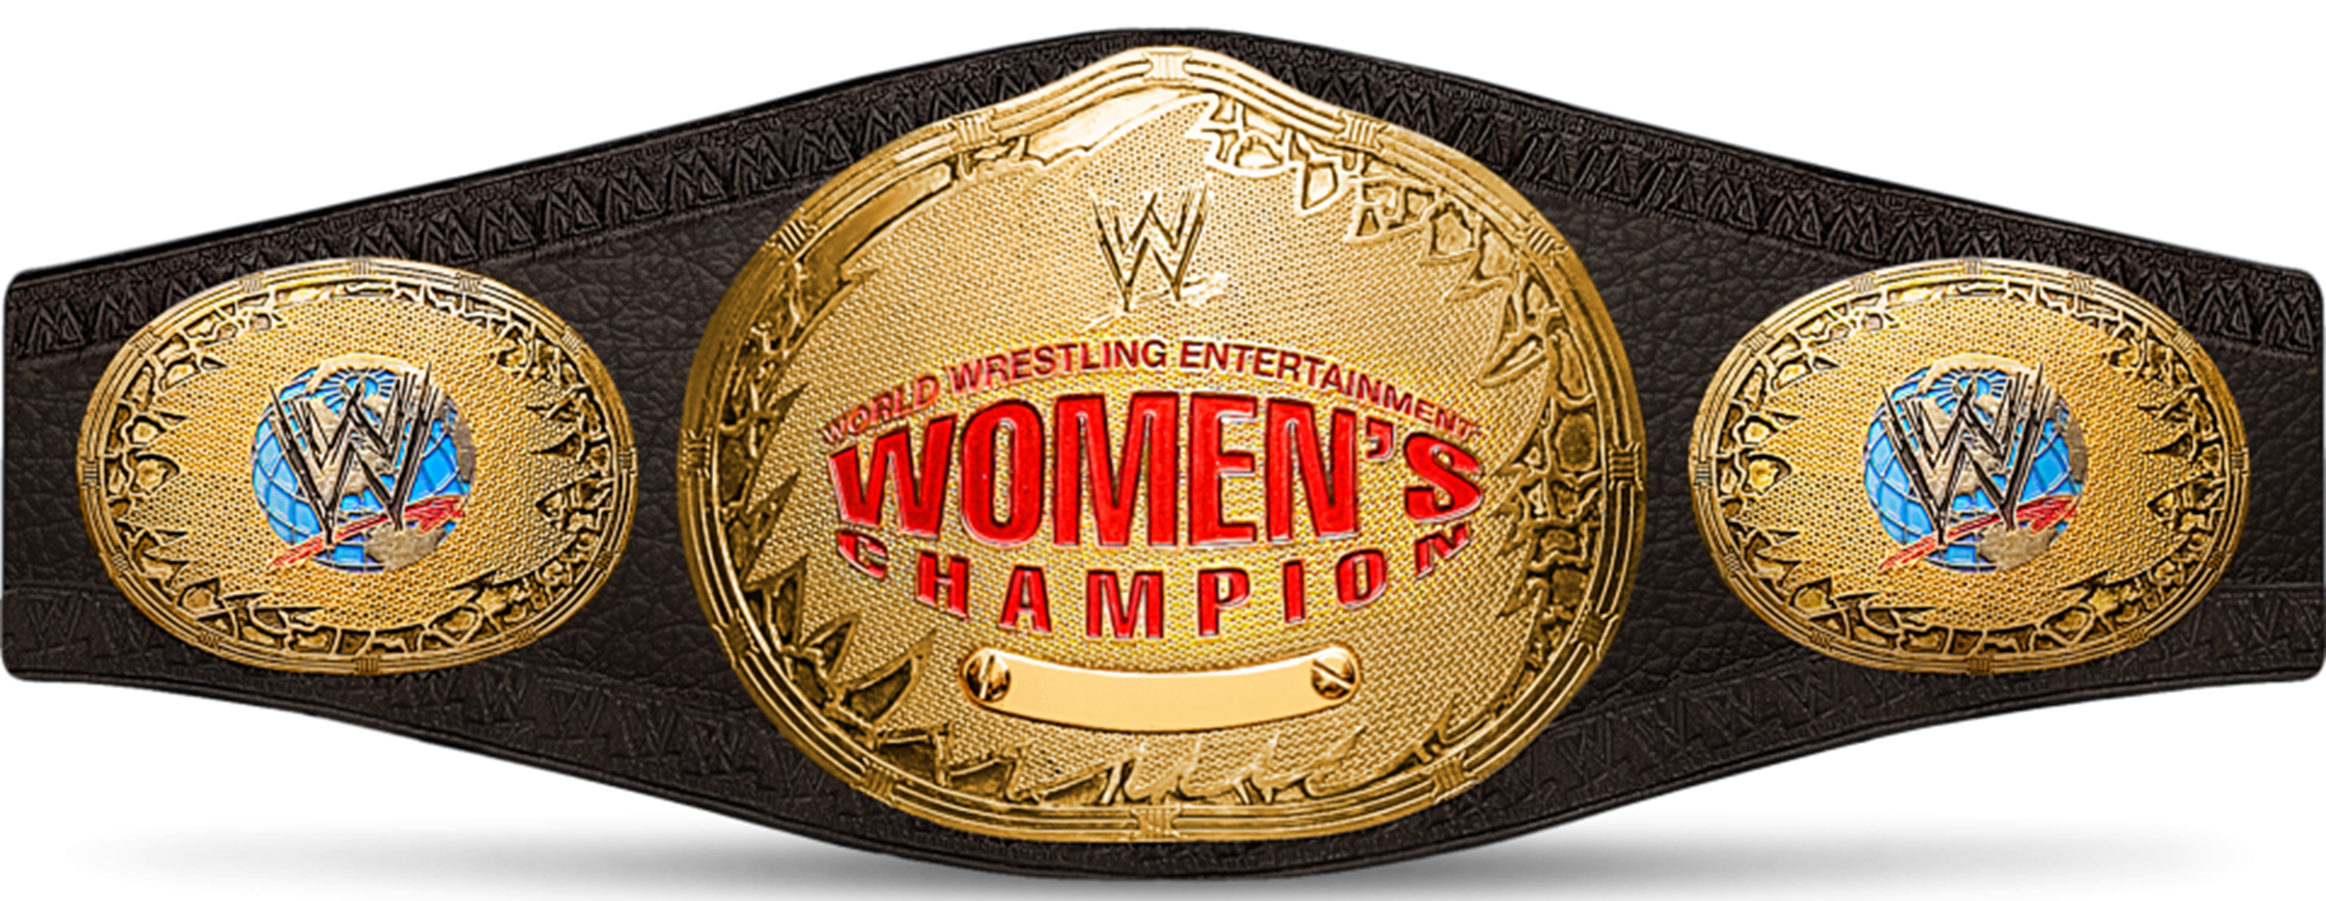 WWE Women's Championship (1956–2010) | Pro Wrestling | FANDOM powered by Wikia2326 x 901